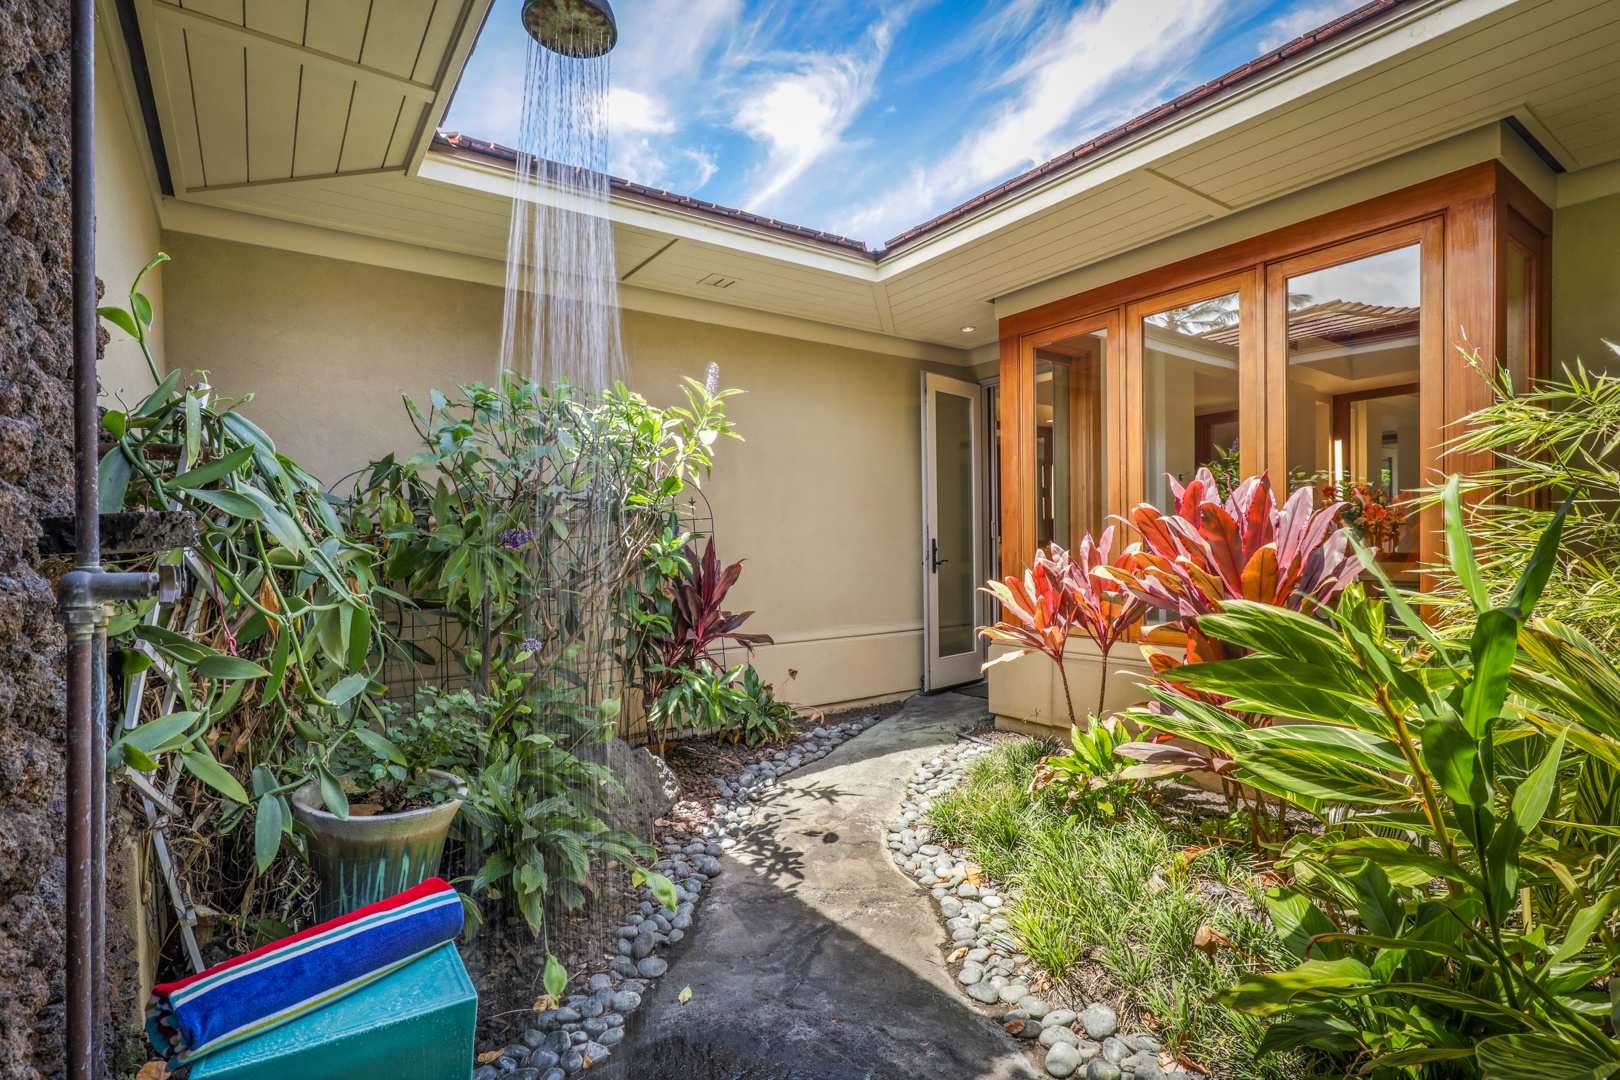 Kailua Kona Vacation Rentals, 4BD Hainoa Estate (122) at Four Seasons Resort at Hualalai - Primary suite outdoor shower garden - a tropical treat!